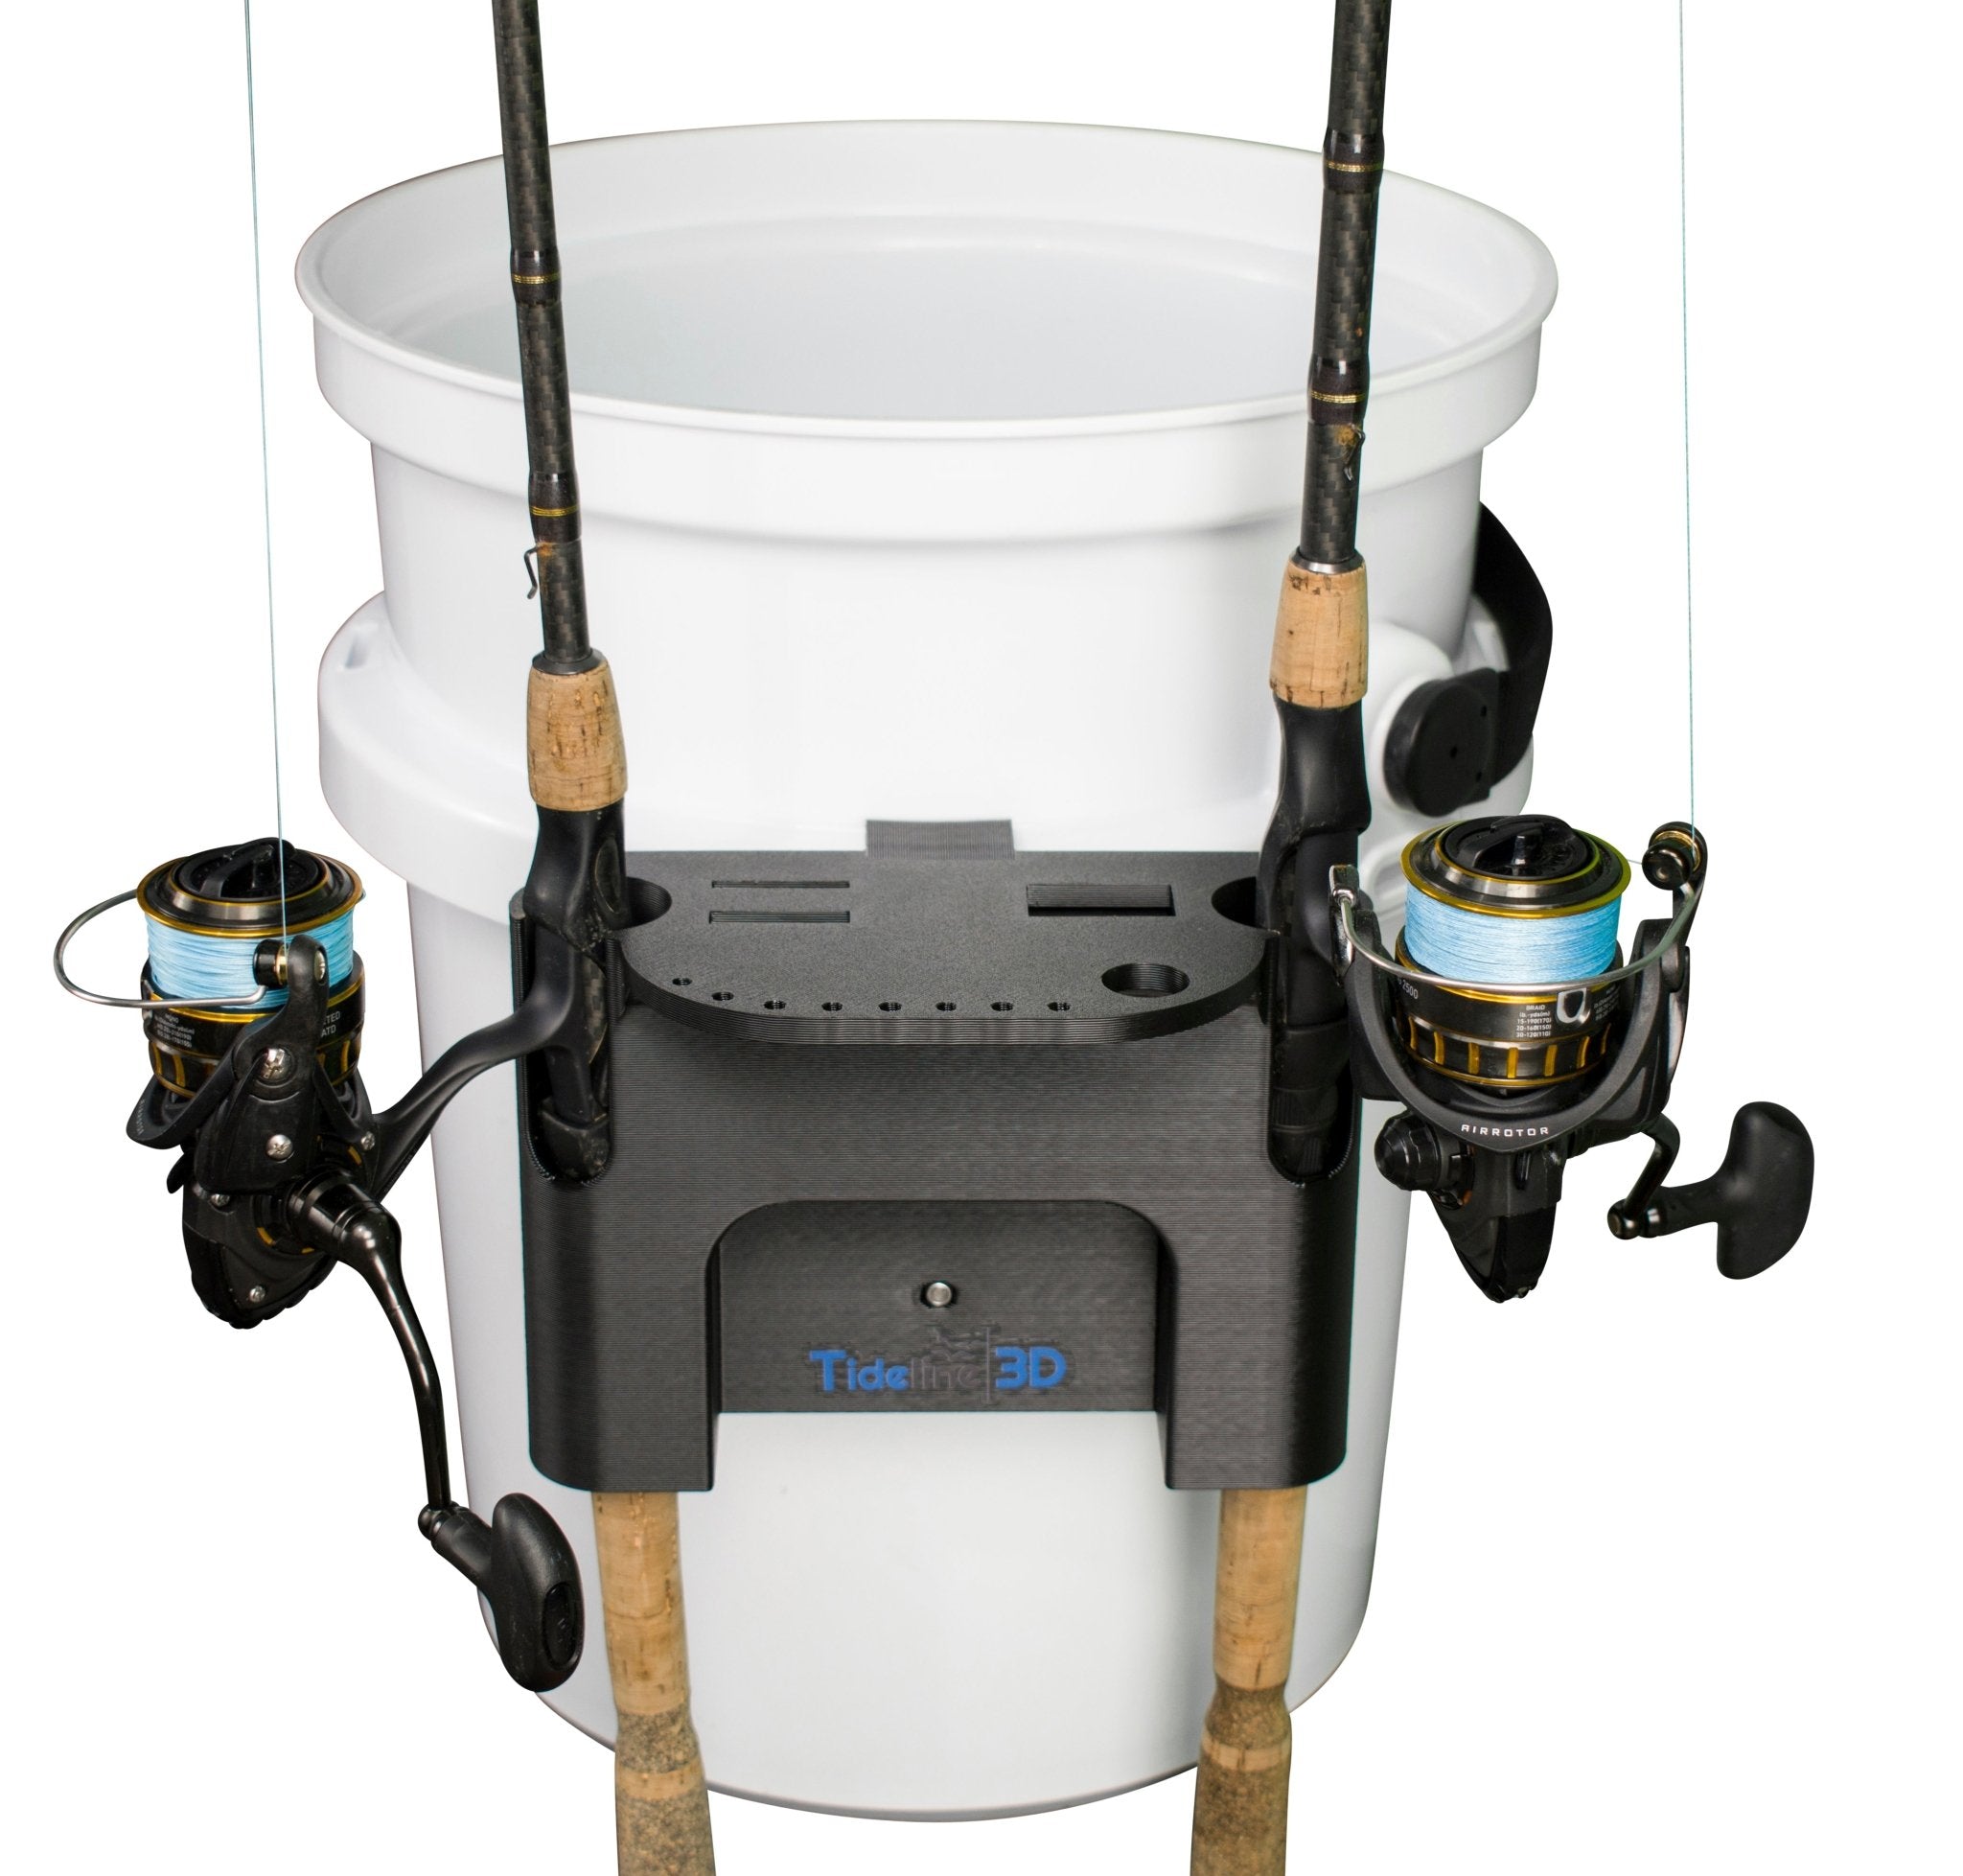 5 gallon bucket accessories - Ice Fishing Forum - Ice Fishing Forum